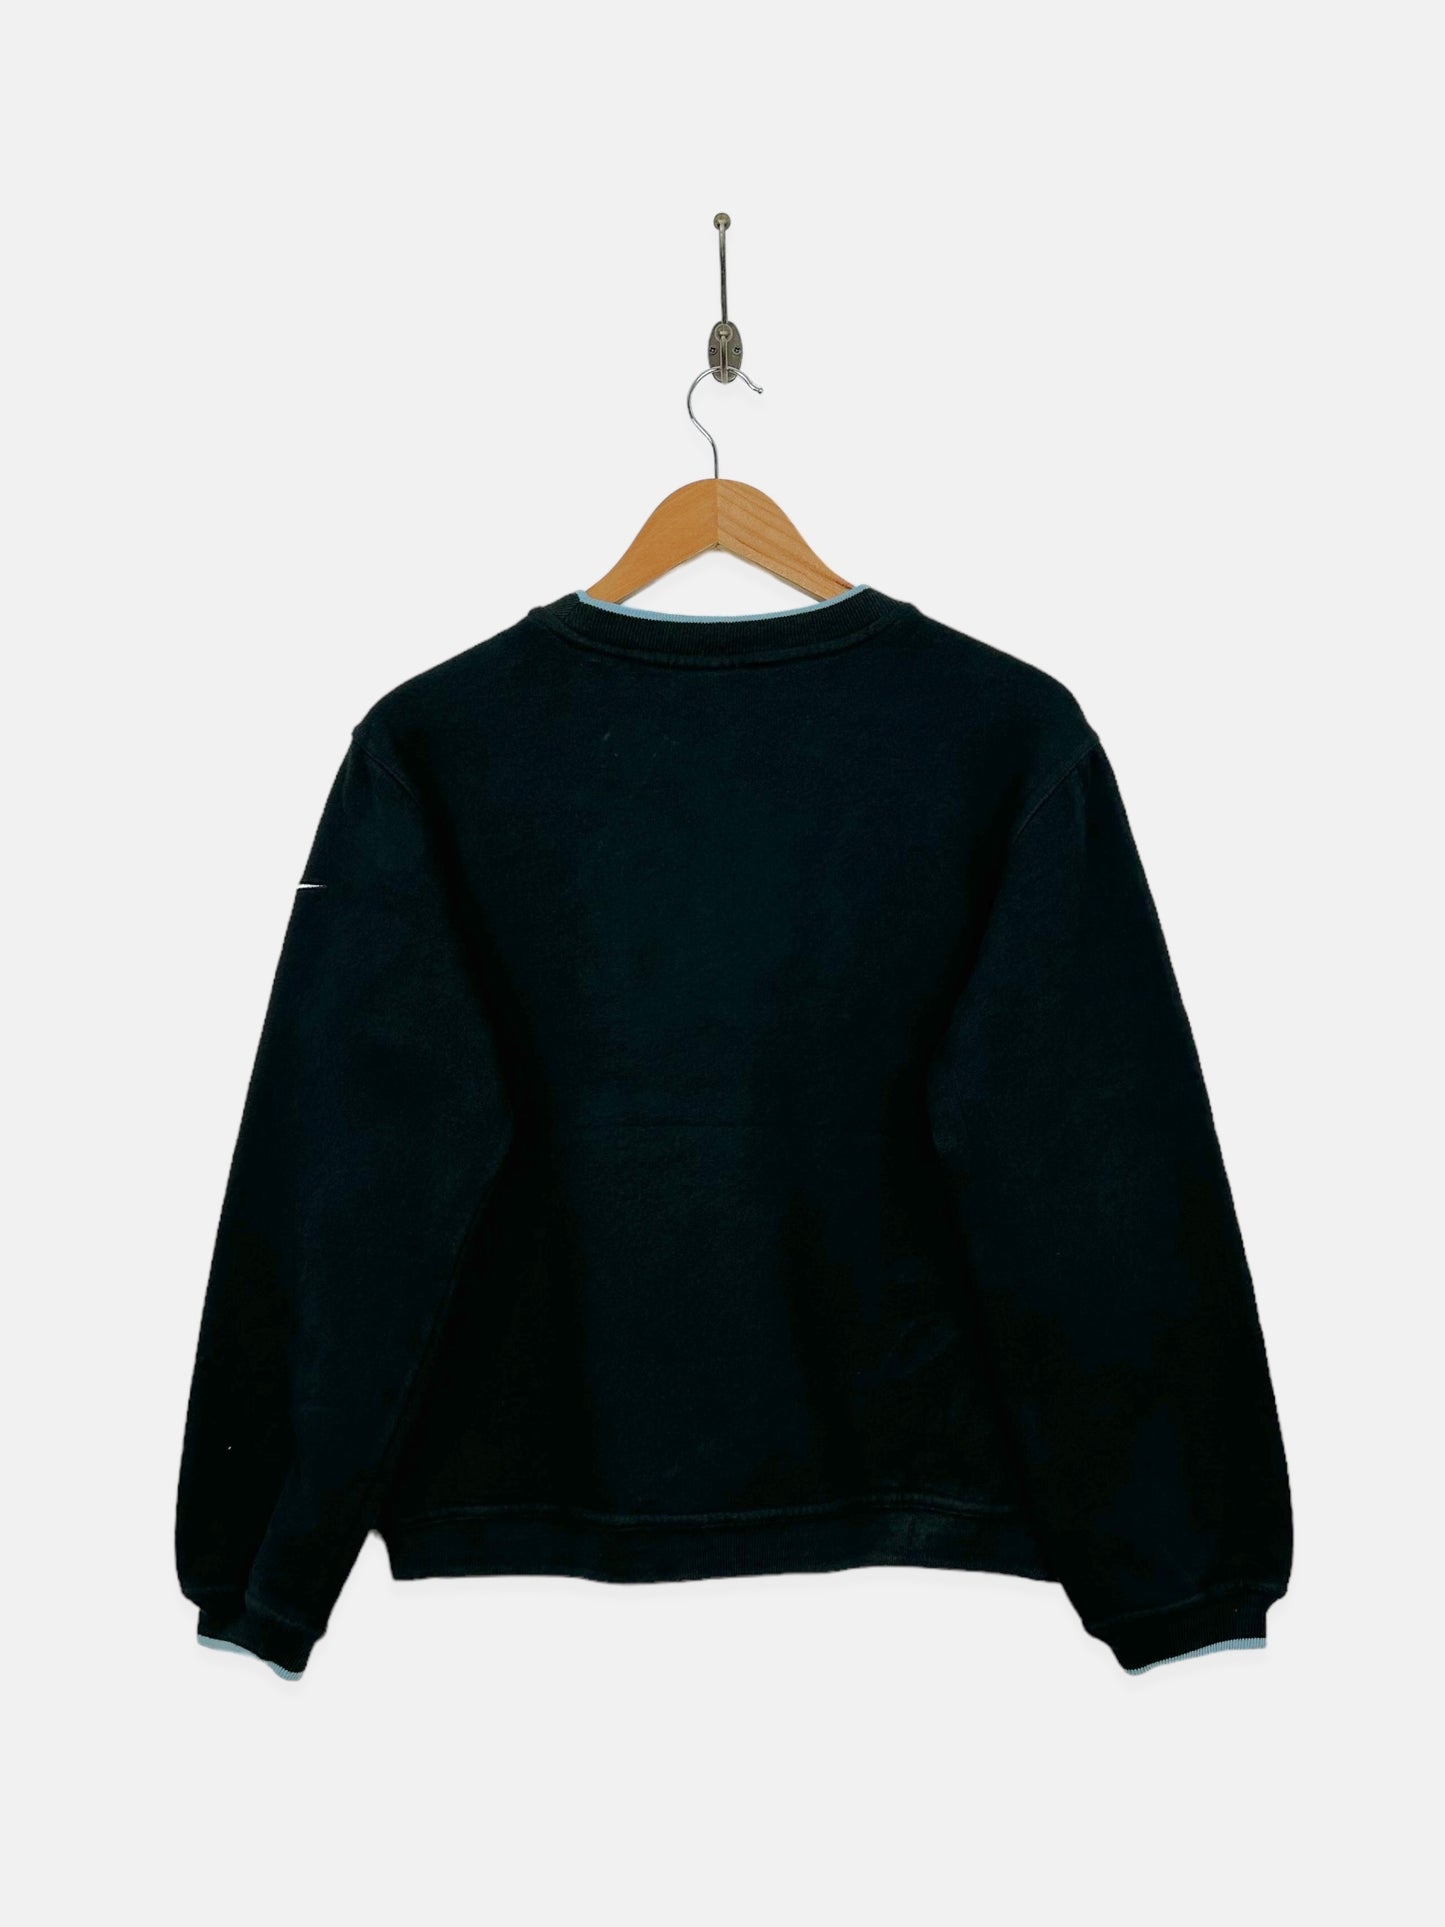 90's Nike Embroidered Vintage Sweatshirt Size 4-6